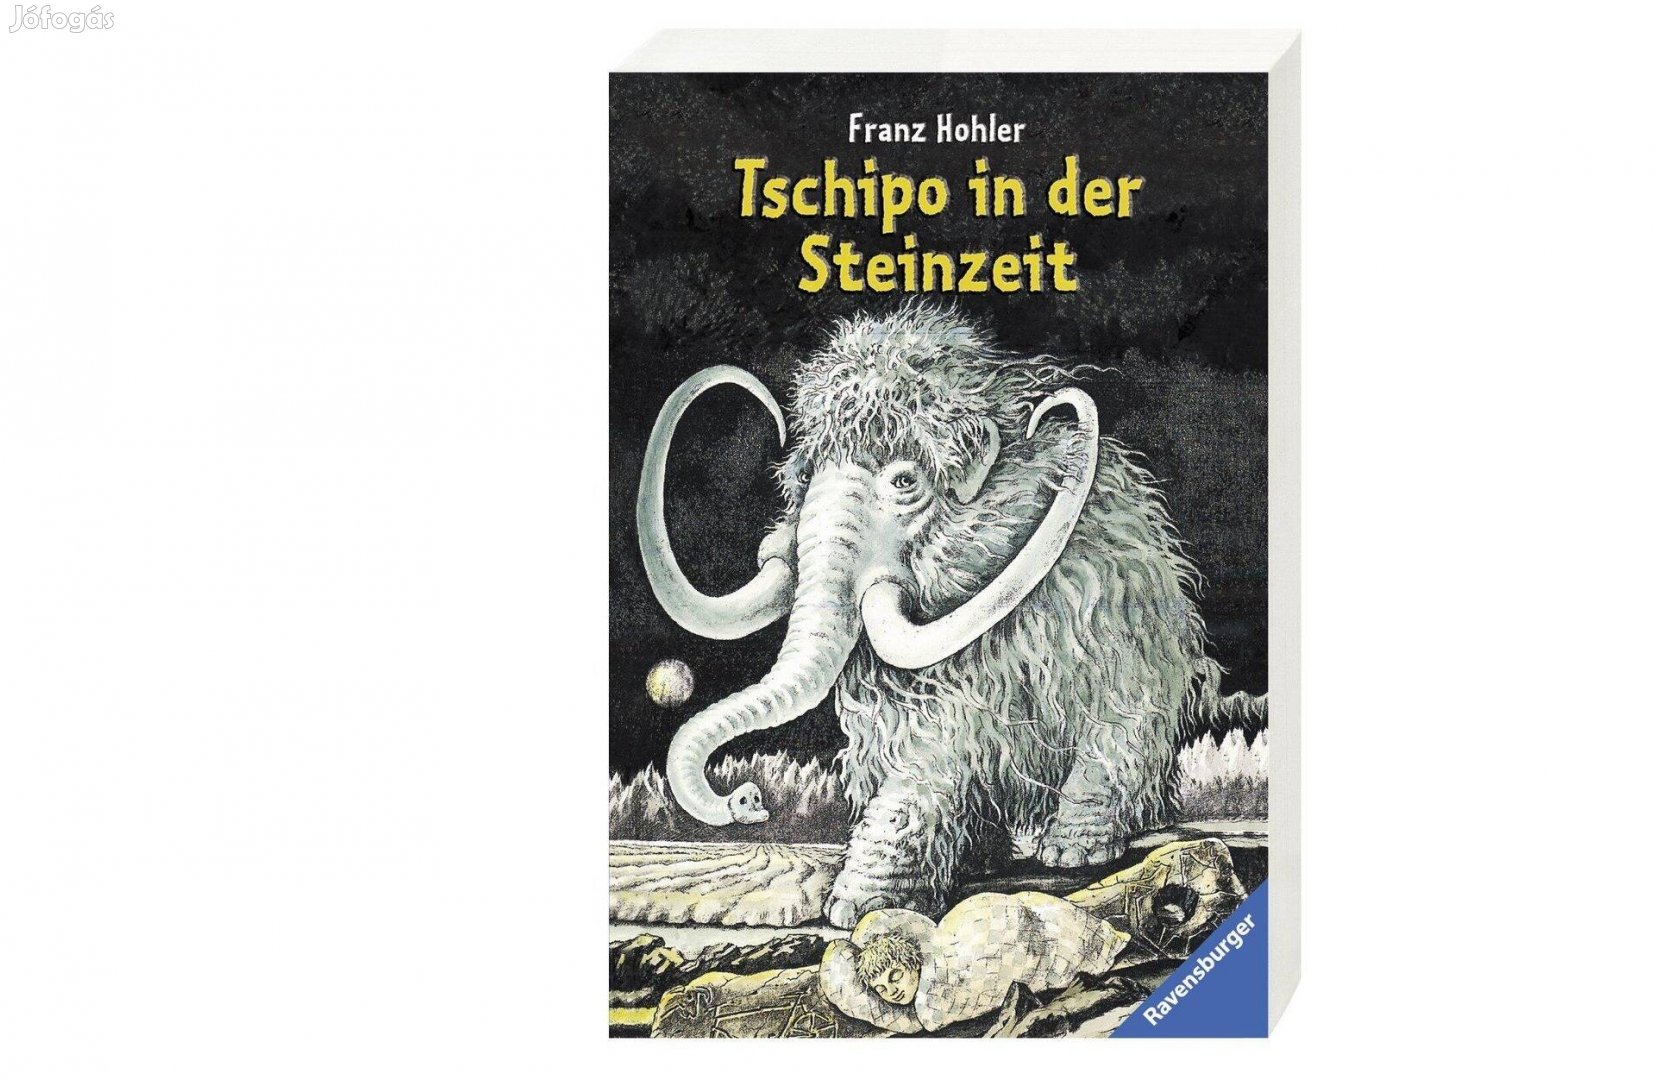 Ravensburger Tschipo in der Steinzeit, németül tanulóknak, új könyv